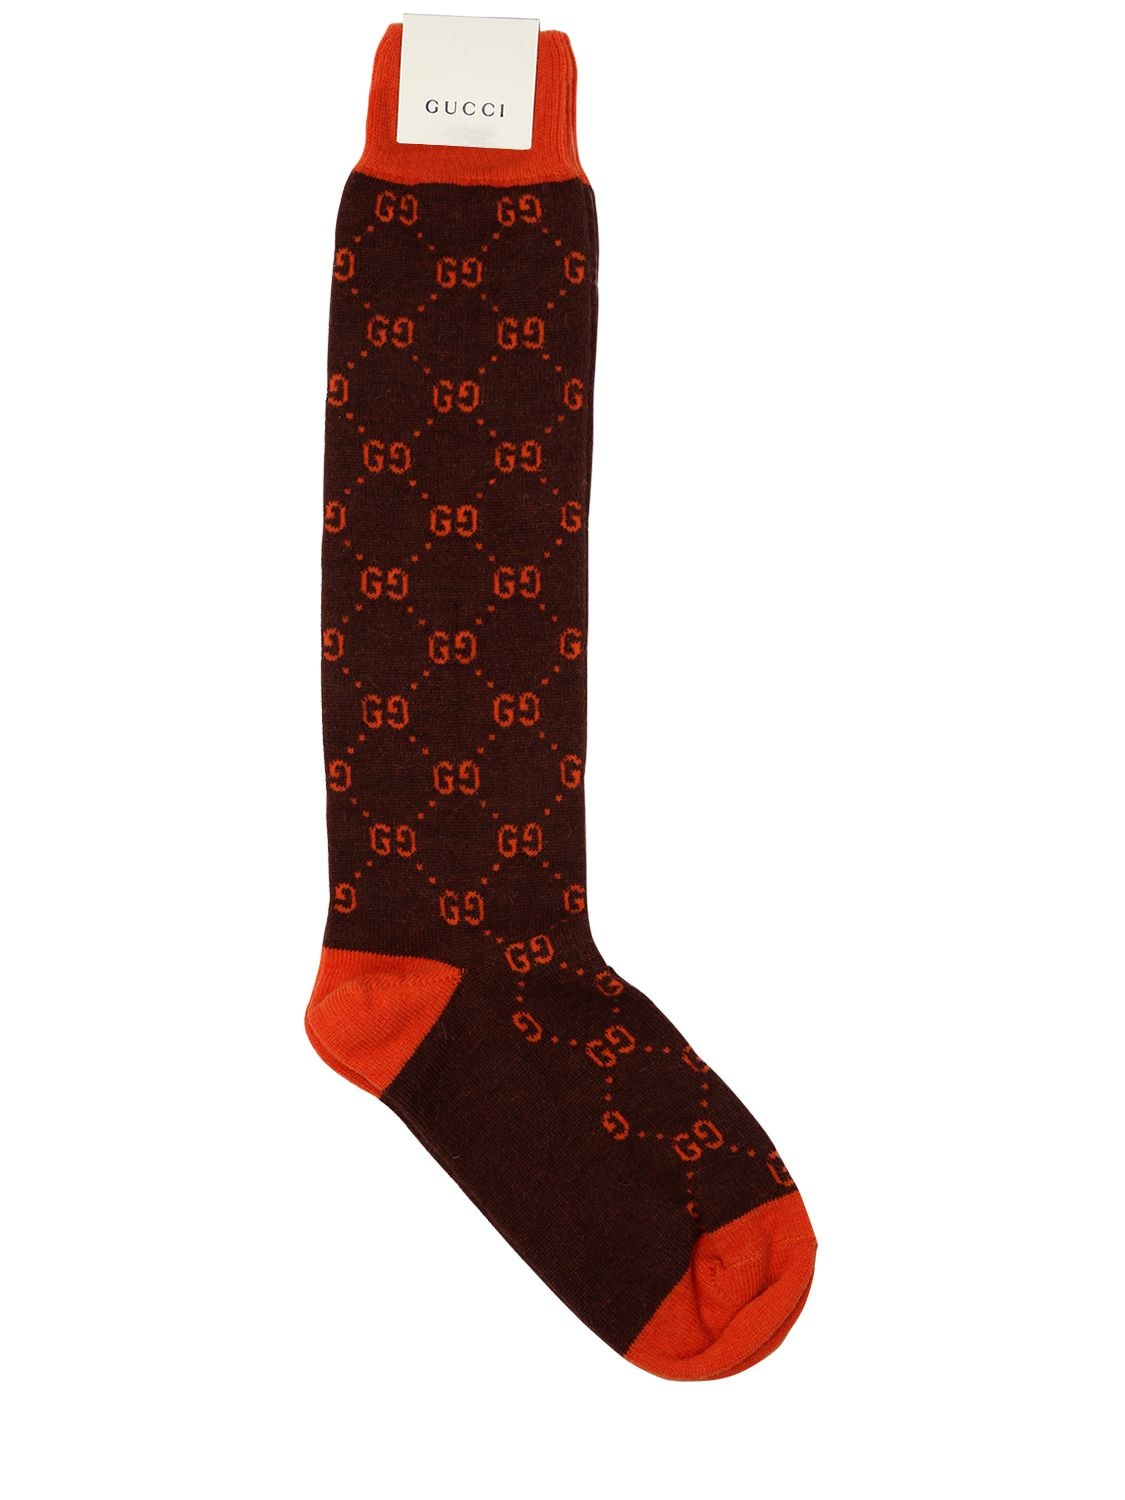 Gucci Gg Supreme Wool Blend Knit Socks In Brown,orange